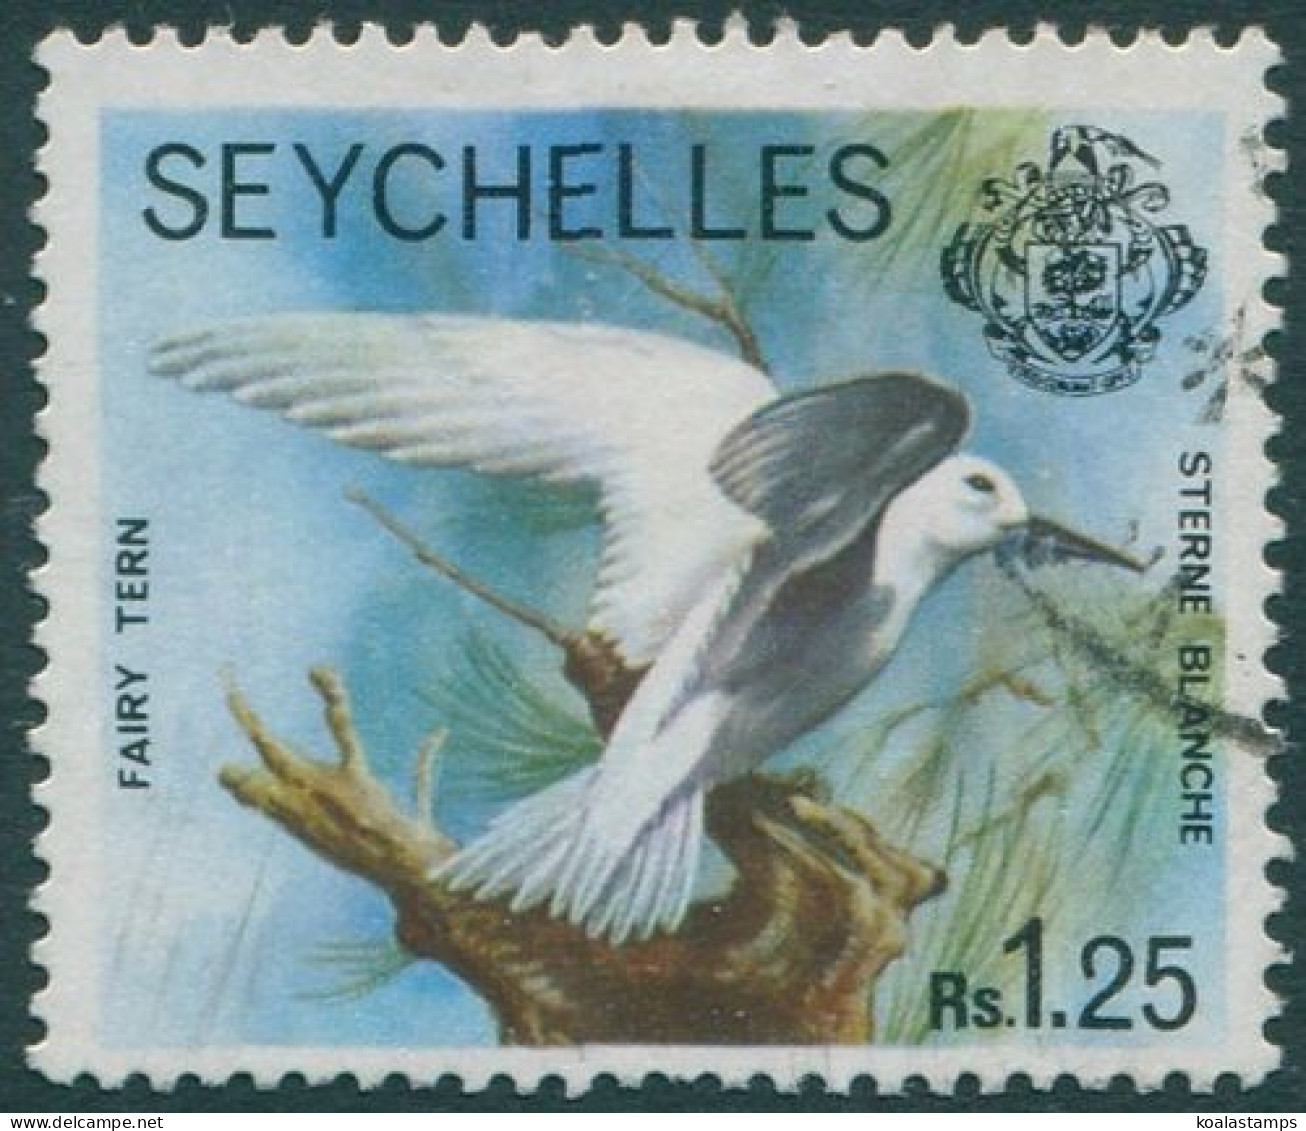 Seychelles 1977 SG413A 1r.25 White Tern FU - Seychelles (1976-...)